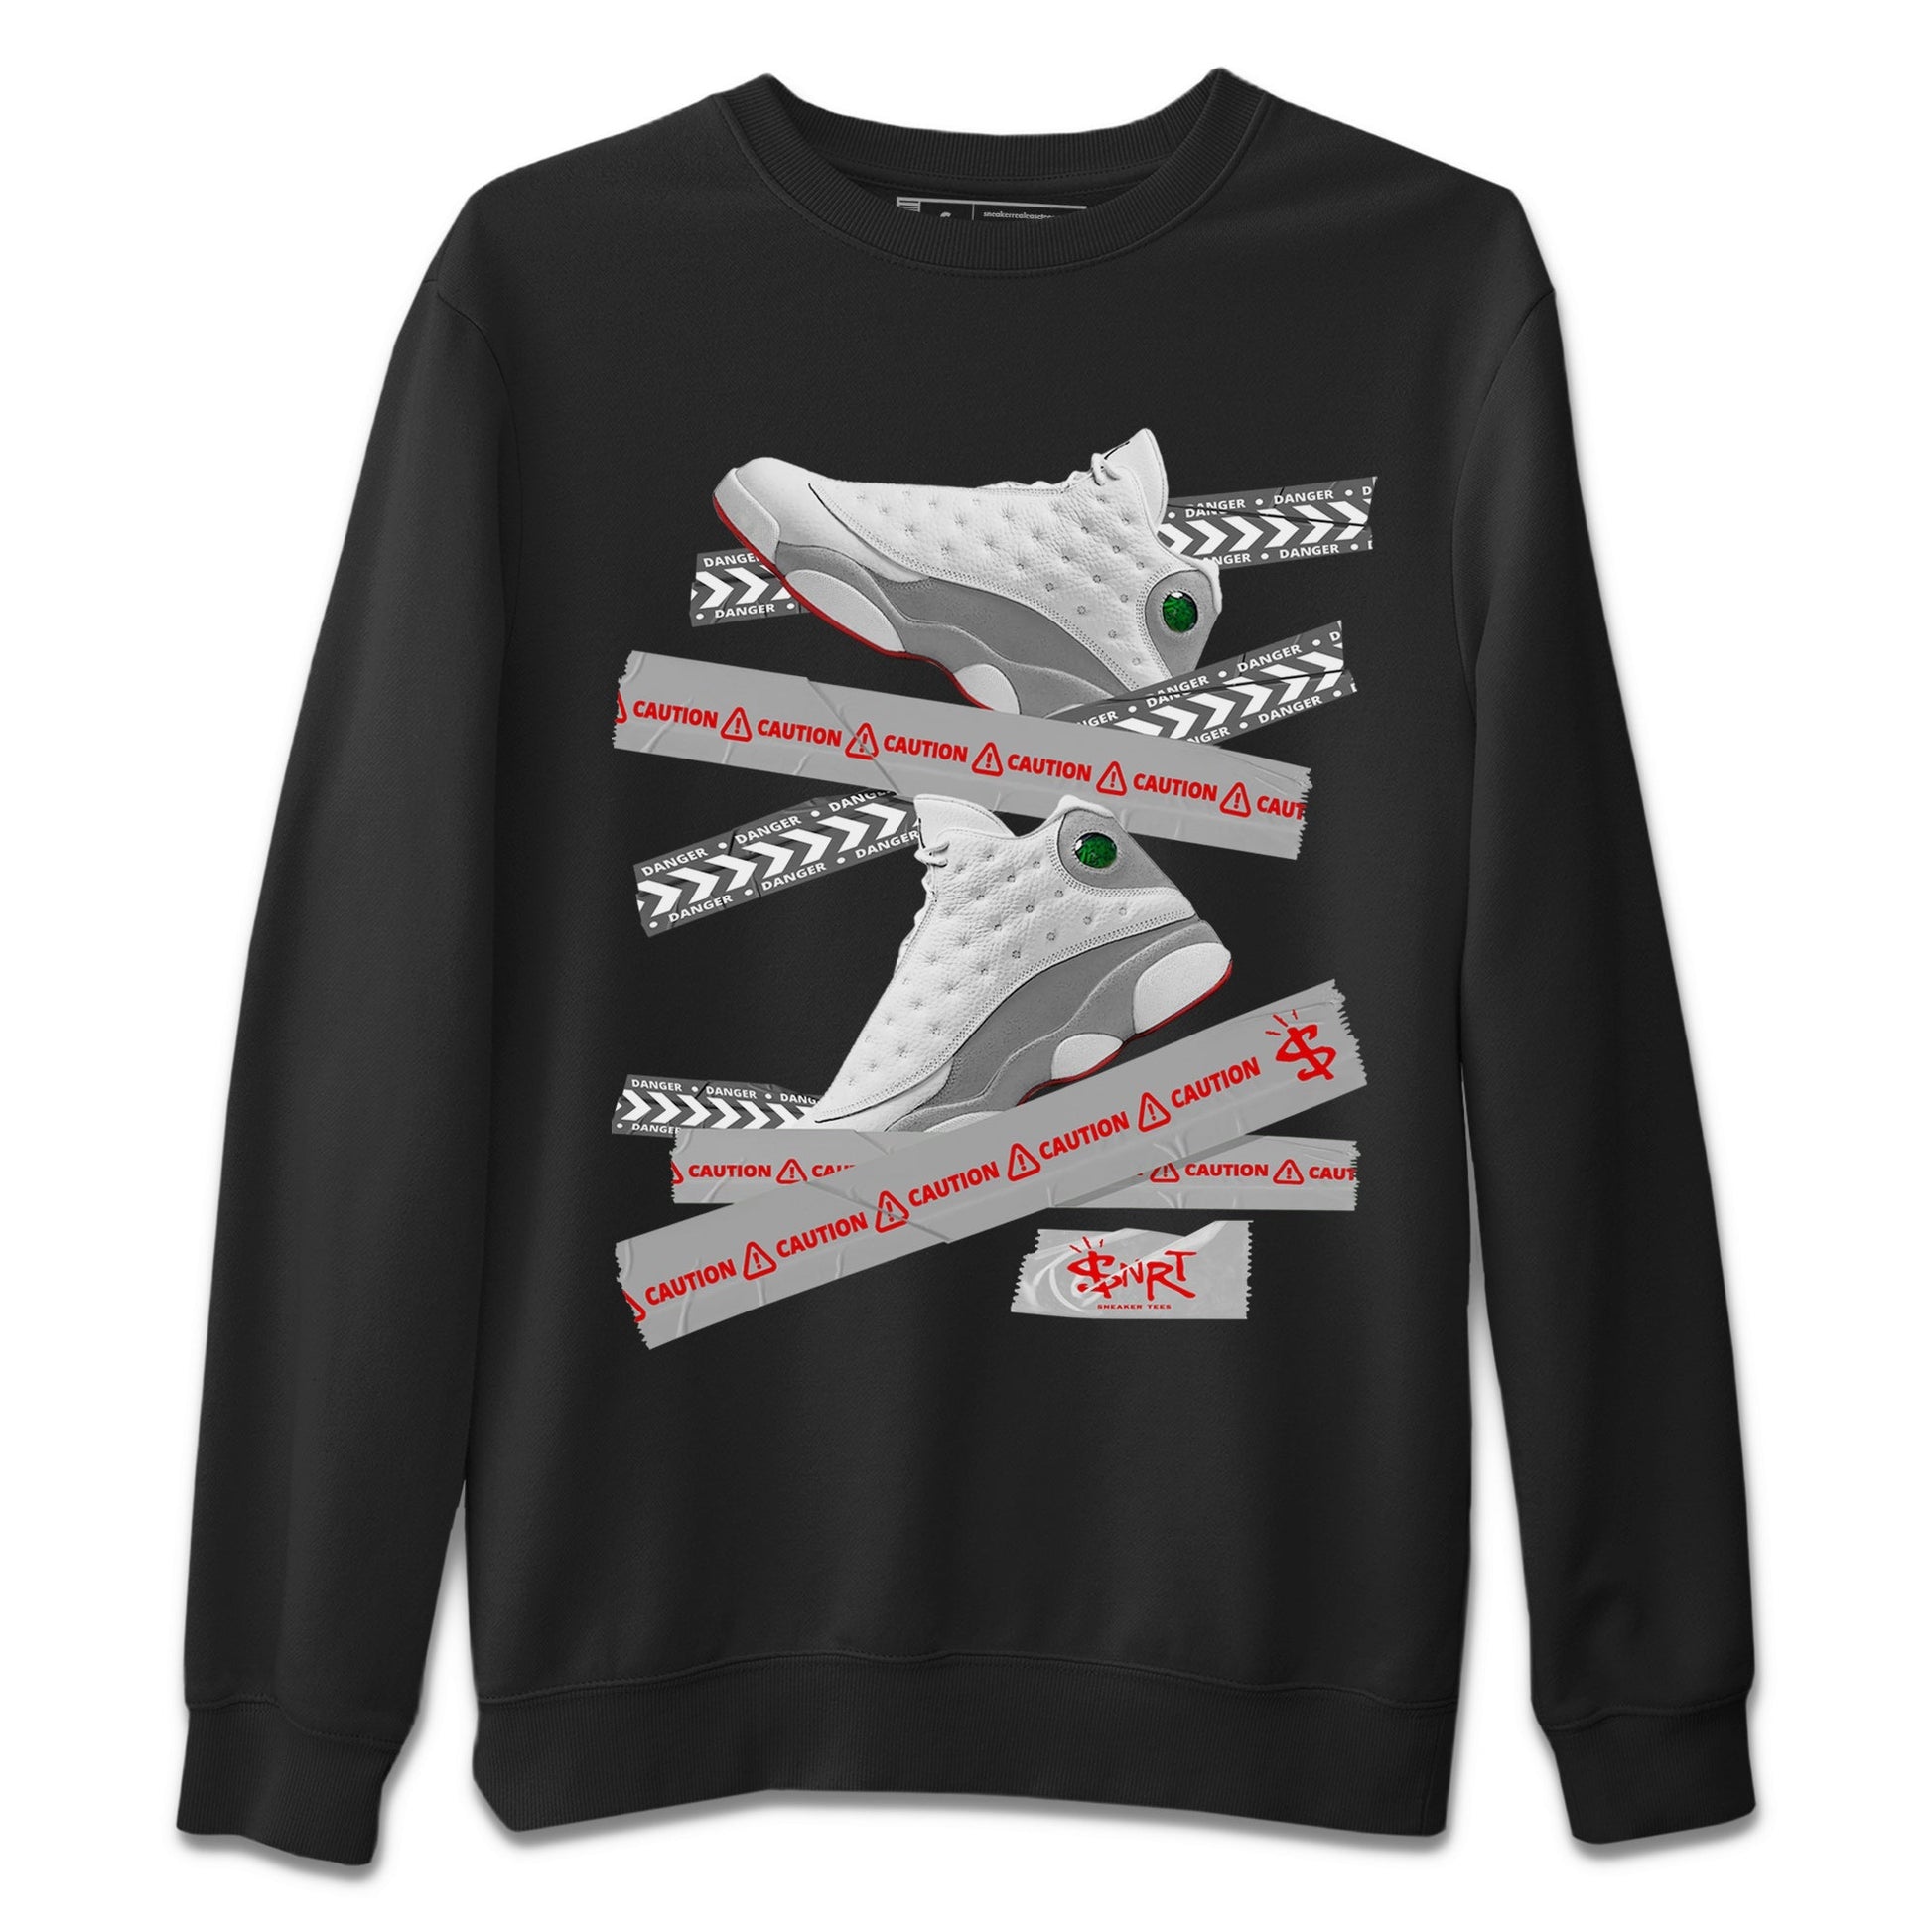 Air Jordan 13 Wolf Grey Sneaker Match Tees Caution Tape Sneaker Tees 13s Wolf Grey Sneaker Release Tees Unisex Shirts Black 2